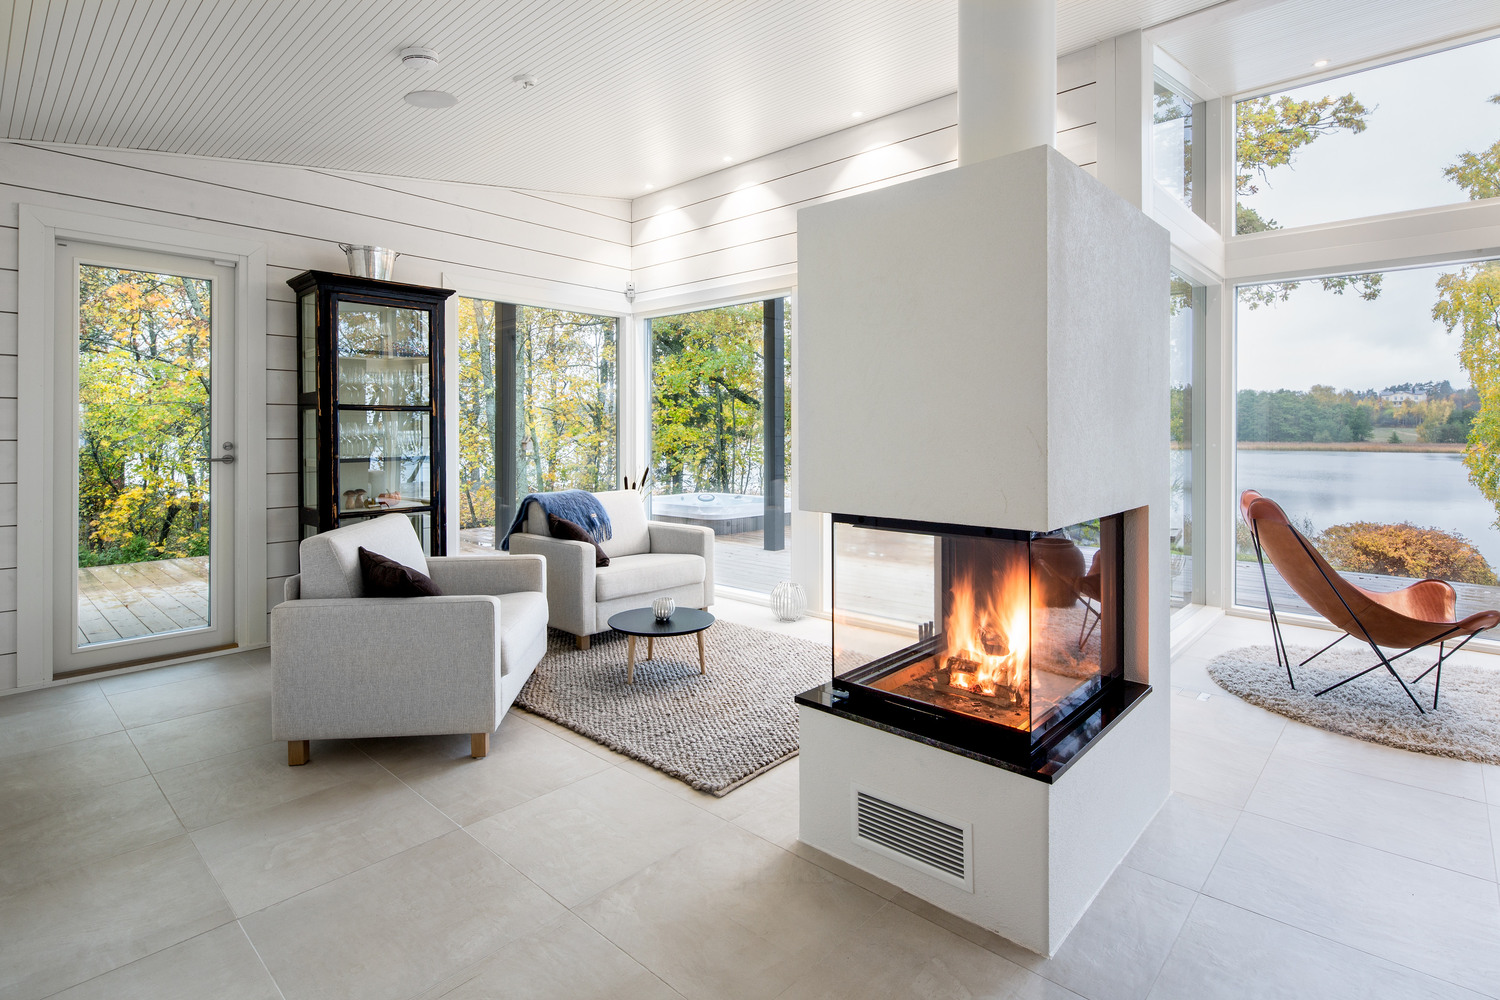 Вилла на берегу с белым трехсторонним камином от архитектора Pluspuu Oy 5 Fireplace - Камины HARK